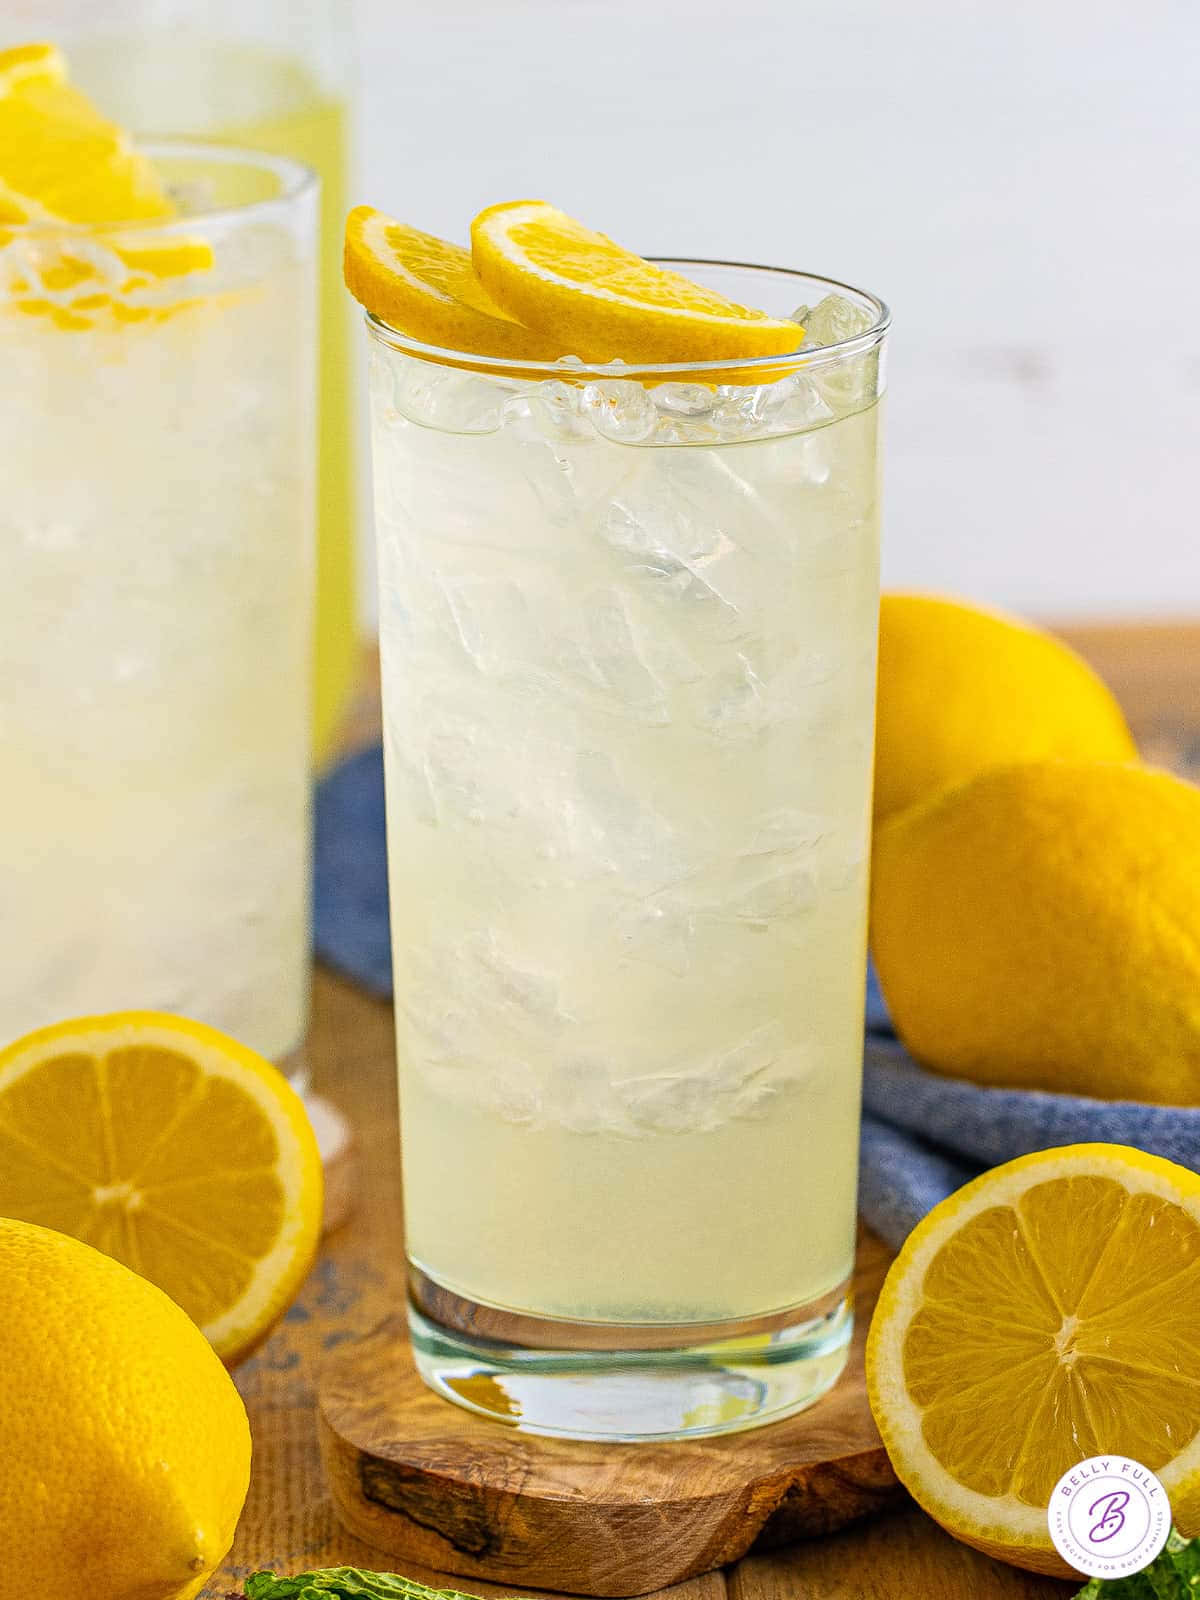 Refreshing glasses of freshly squeezed lemonade